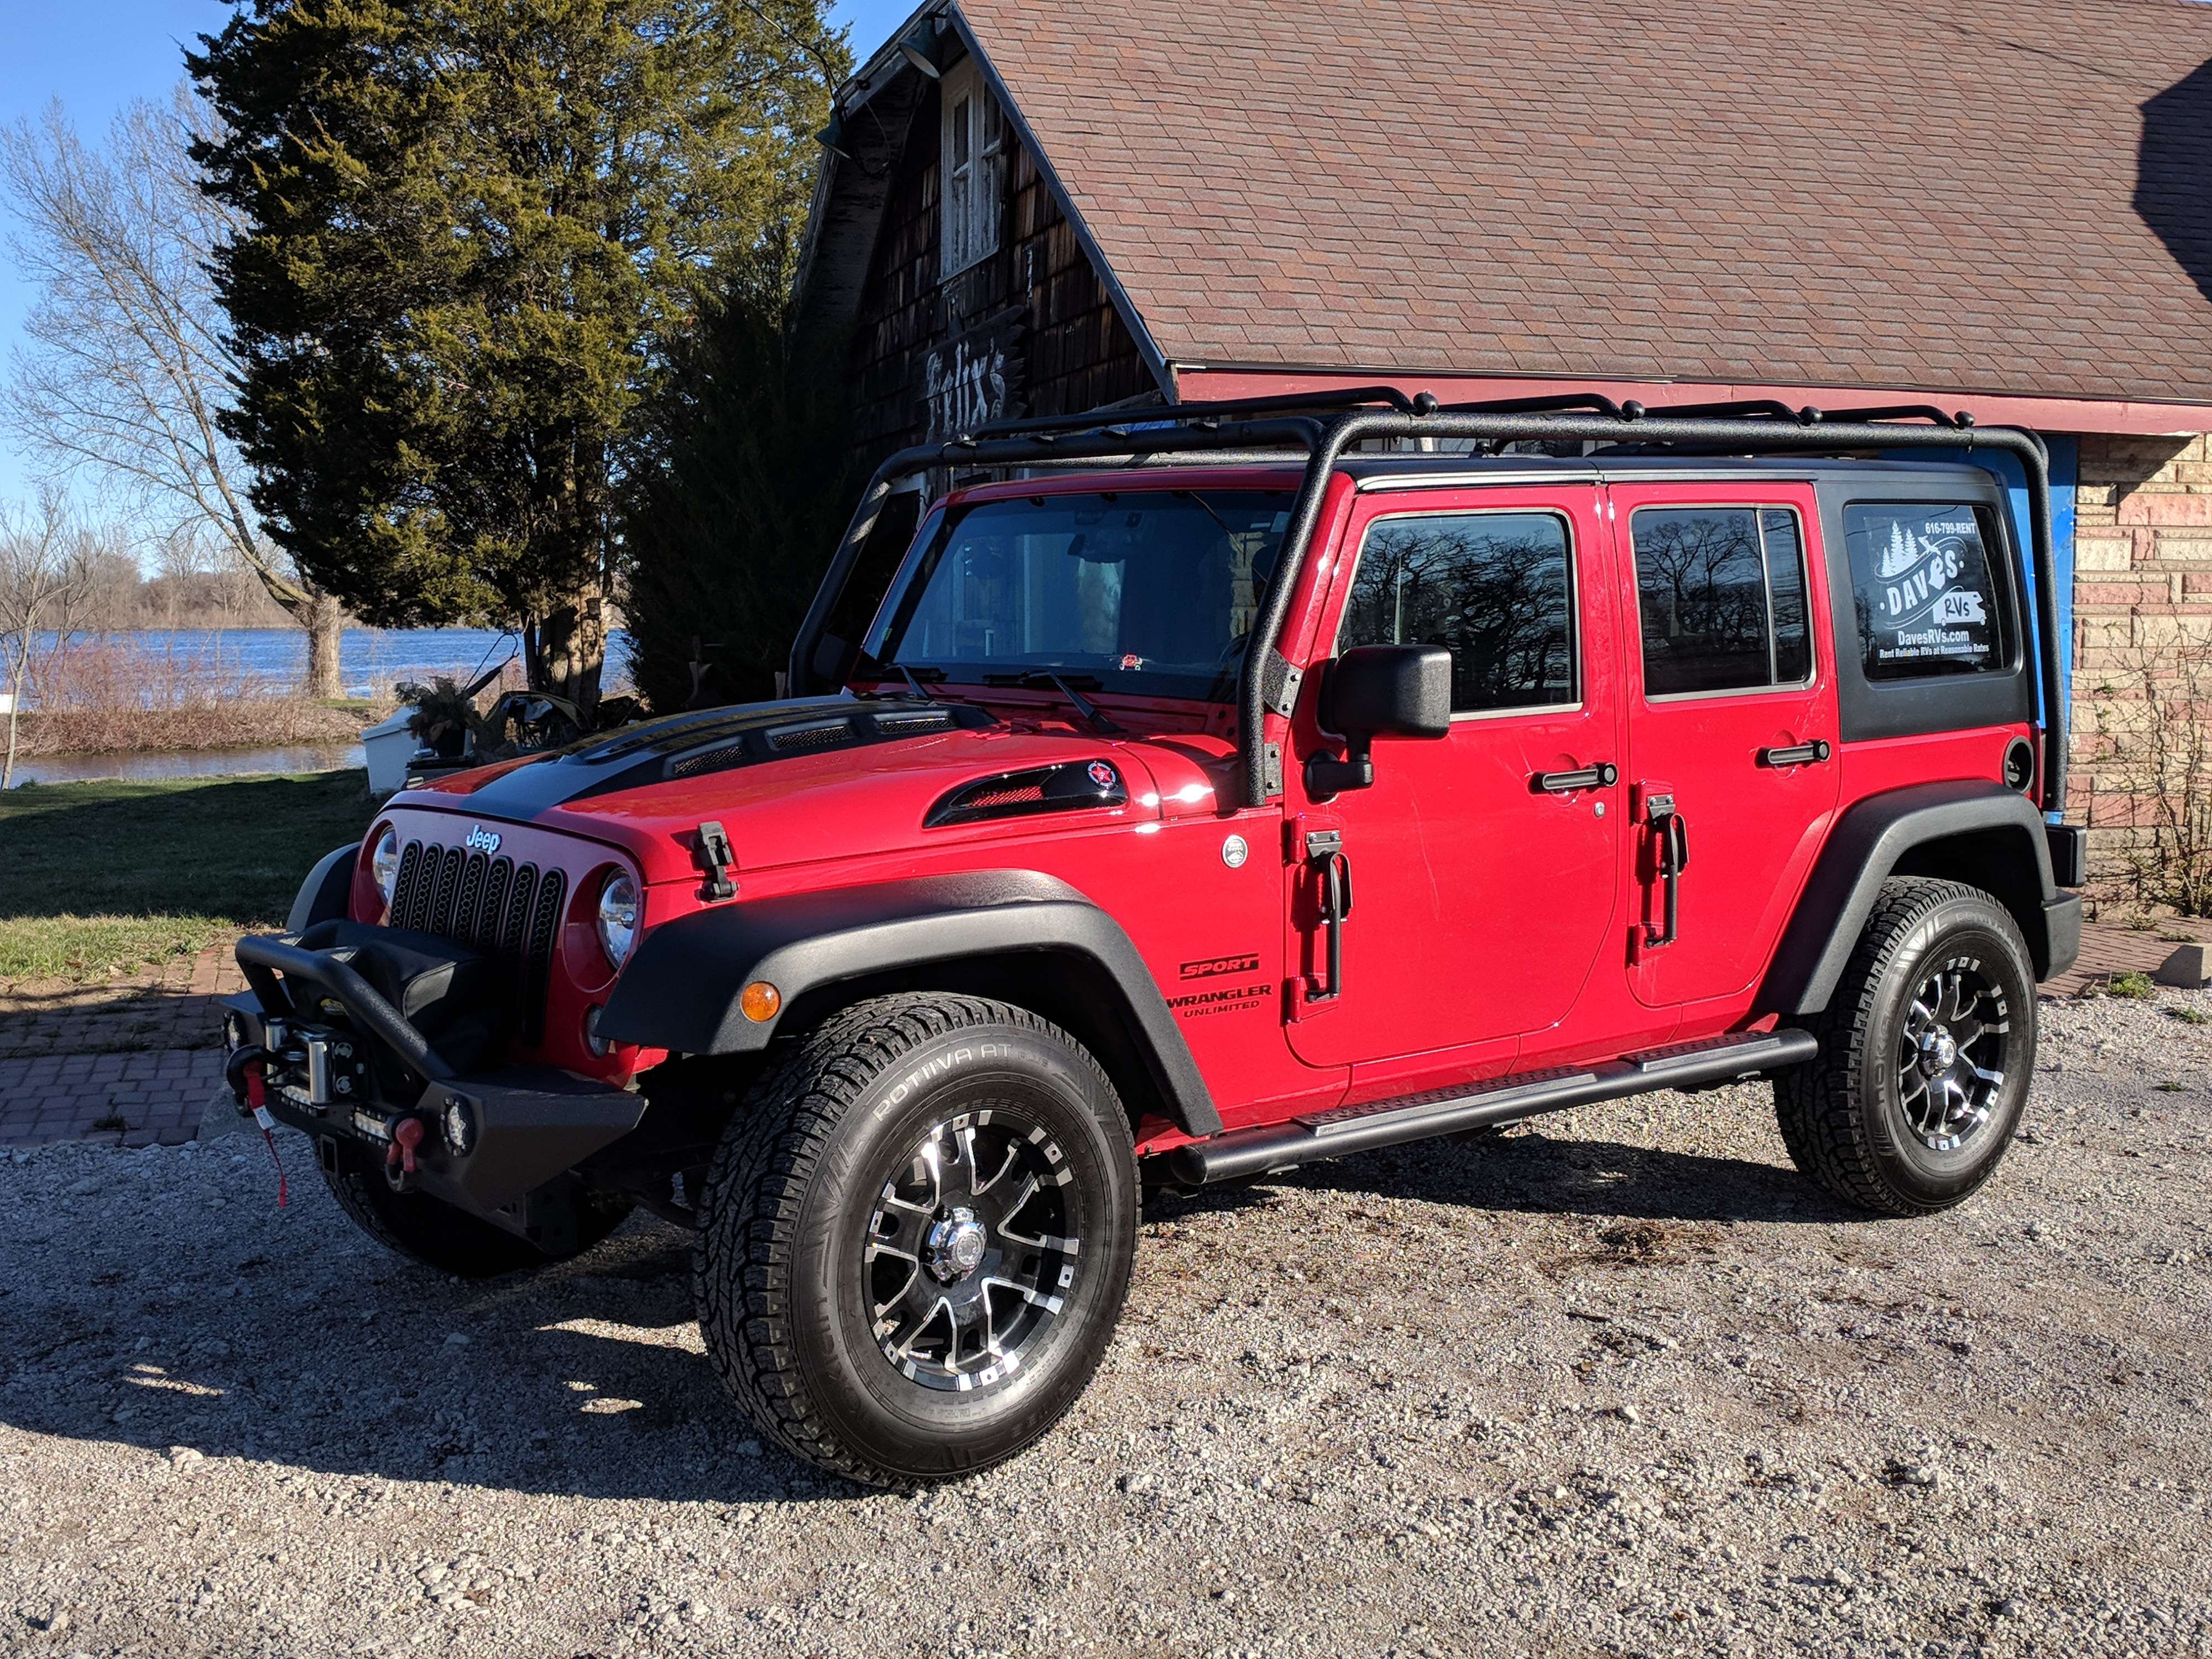 2014 Jeep Wrangler - Sport Other Rental in Grand Rapids, MI | Outdoorsy